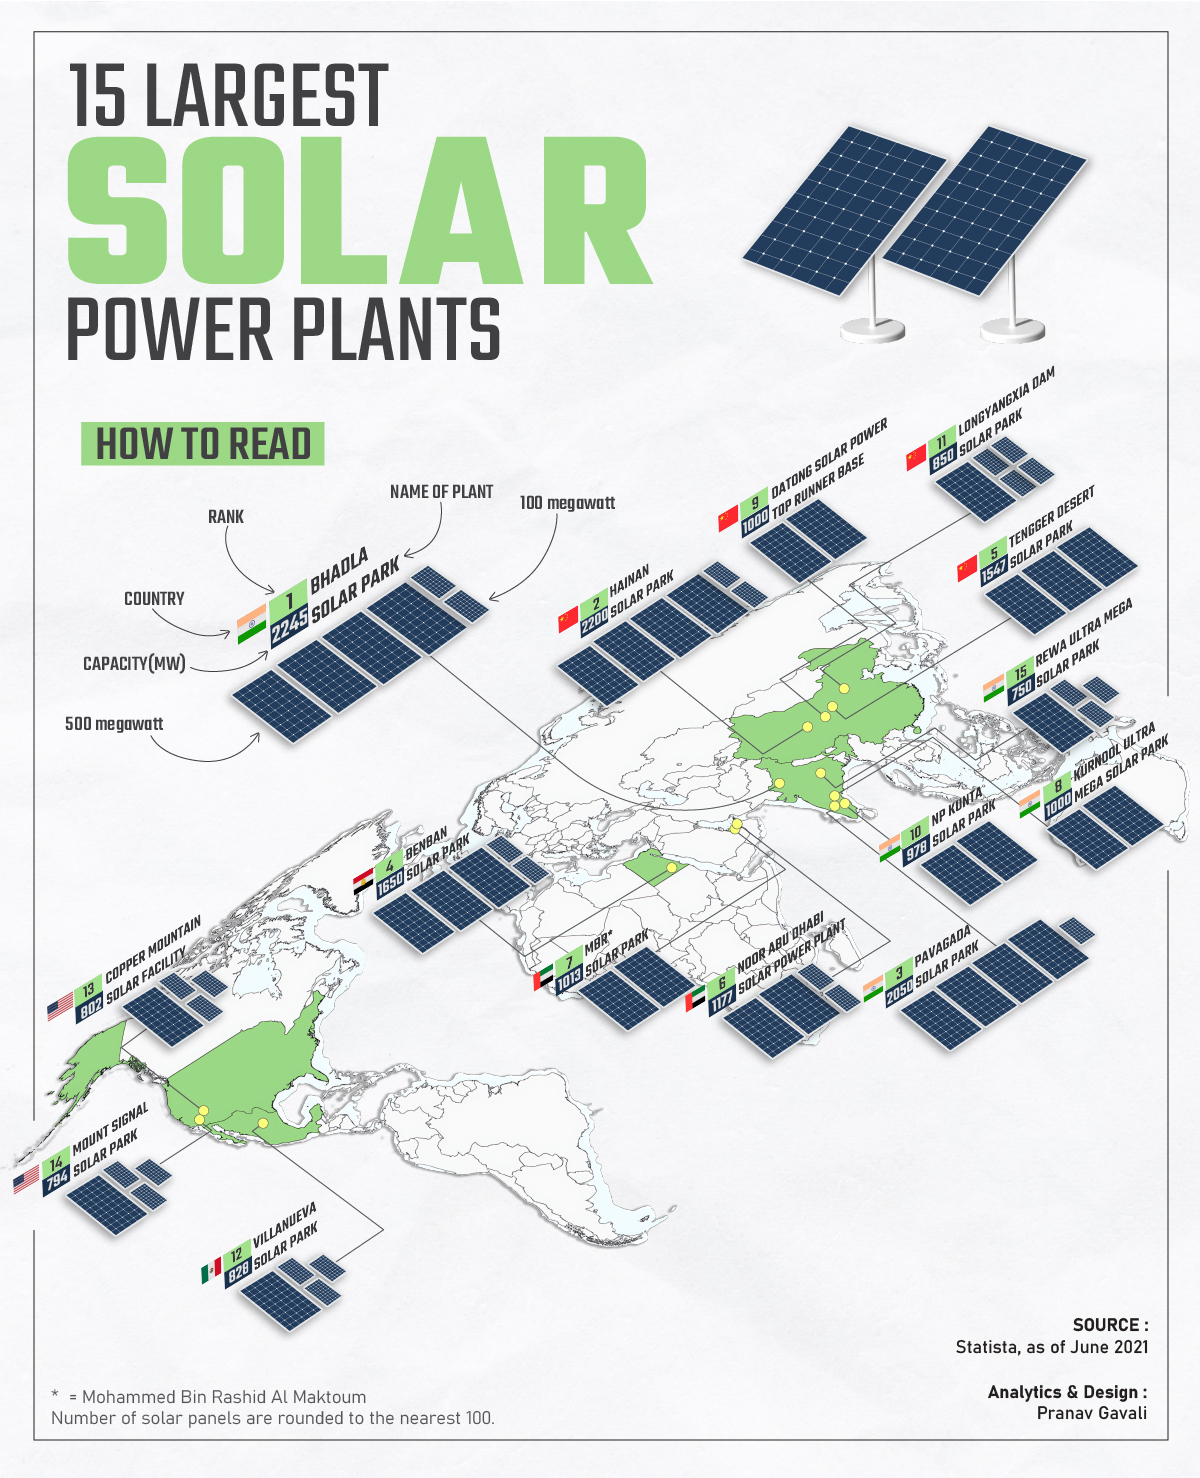 World's 15 largest solar power plants